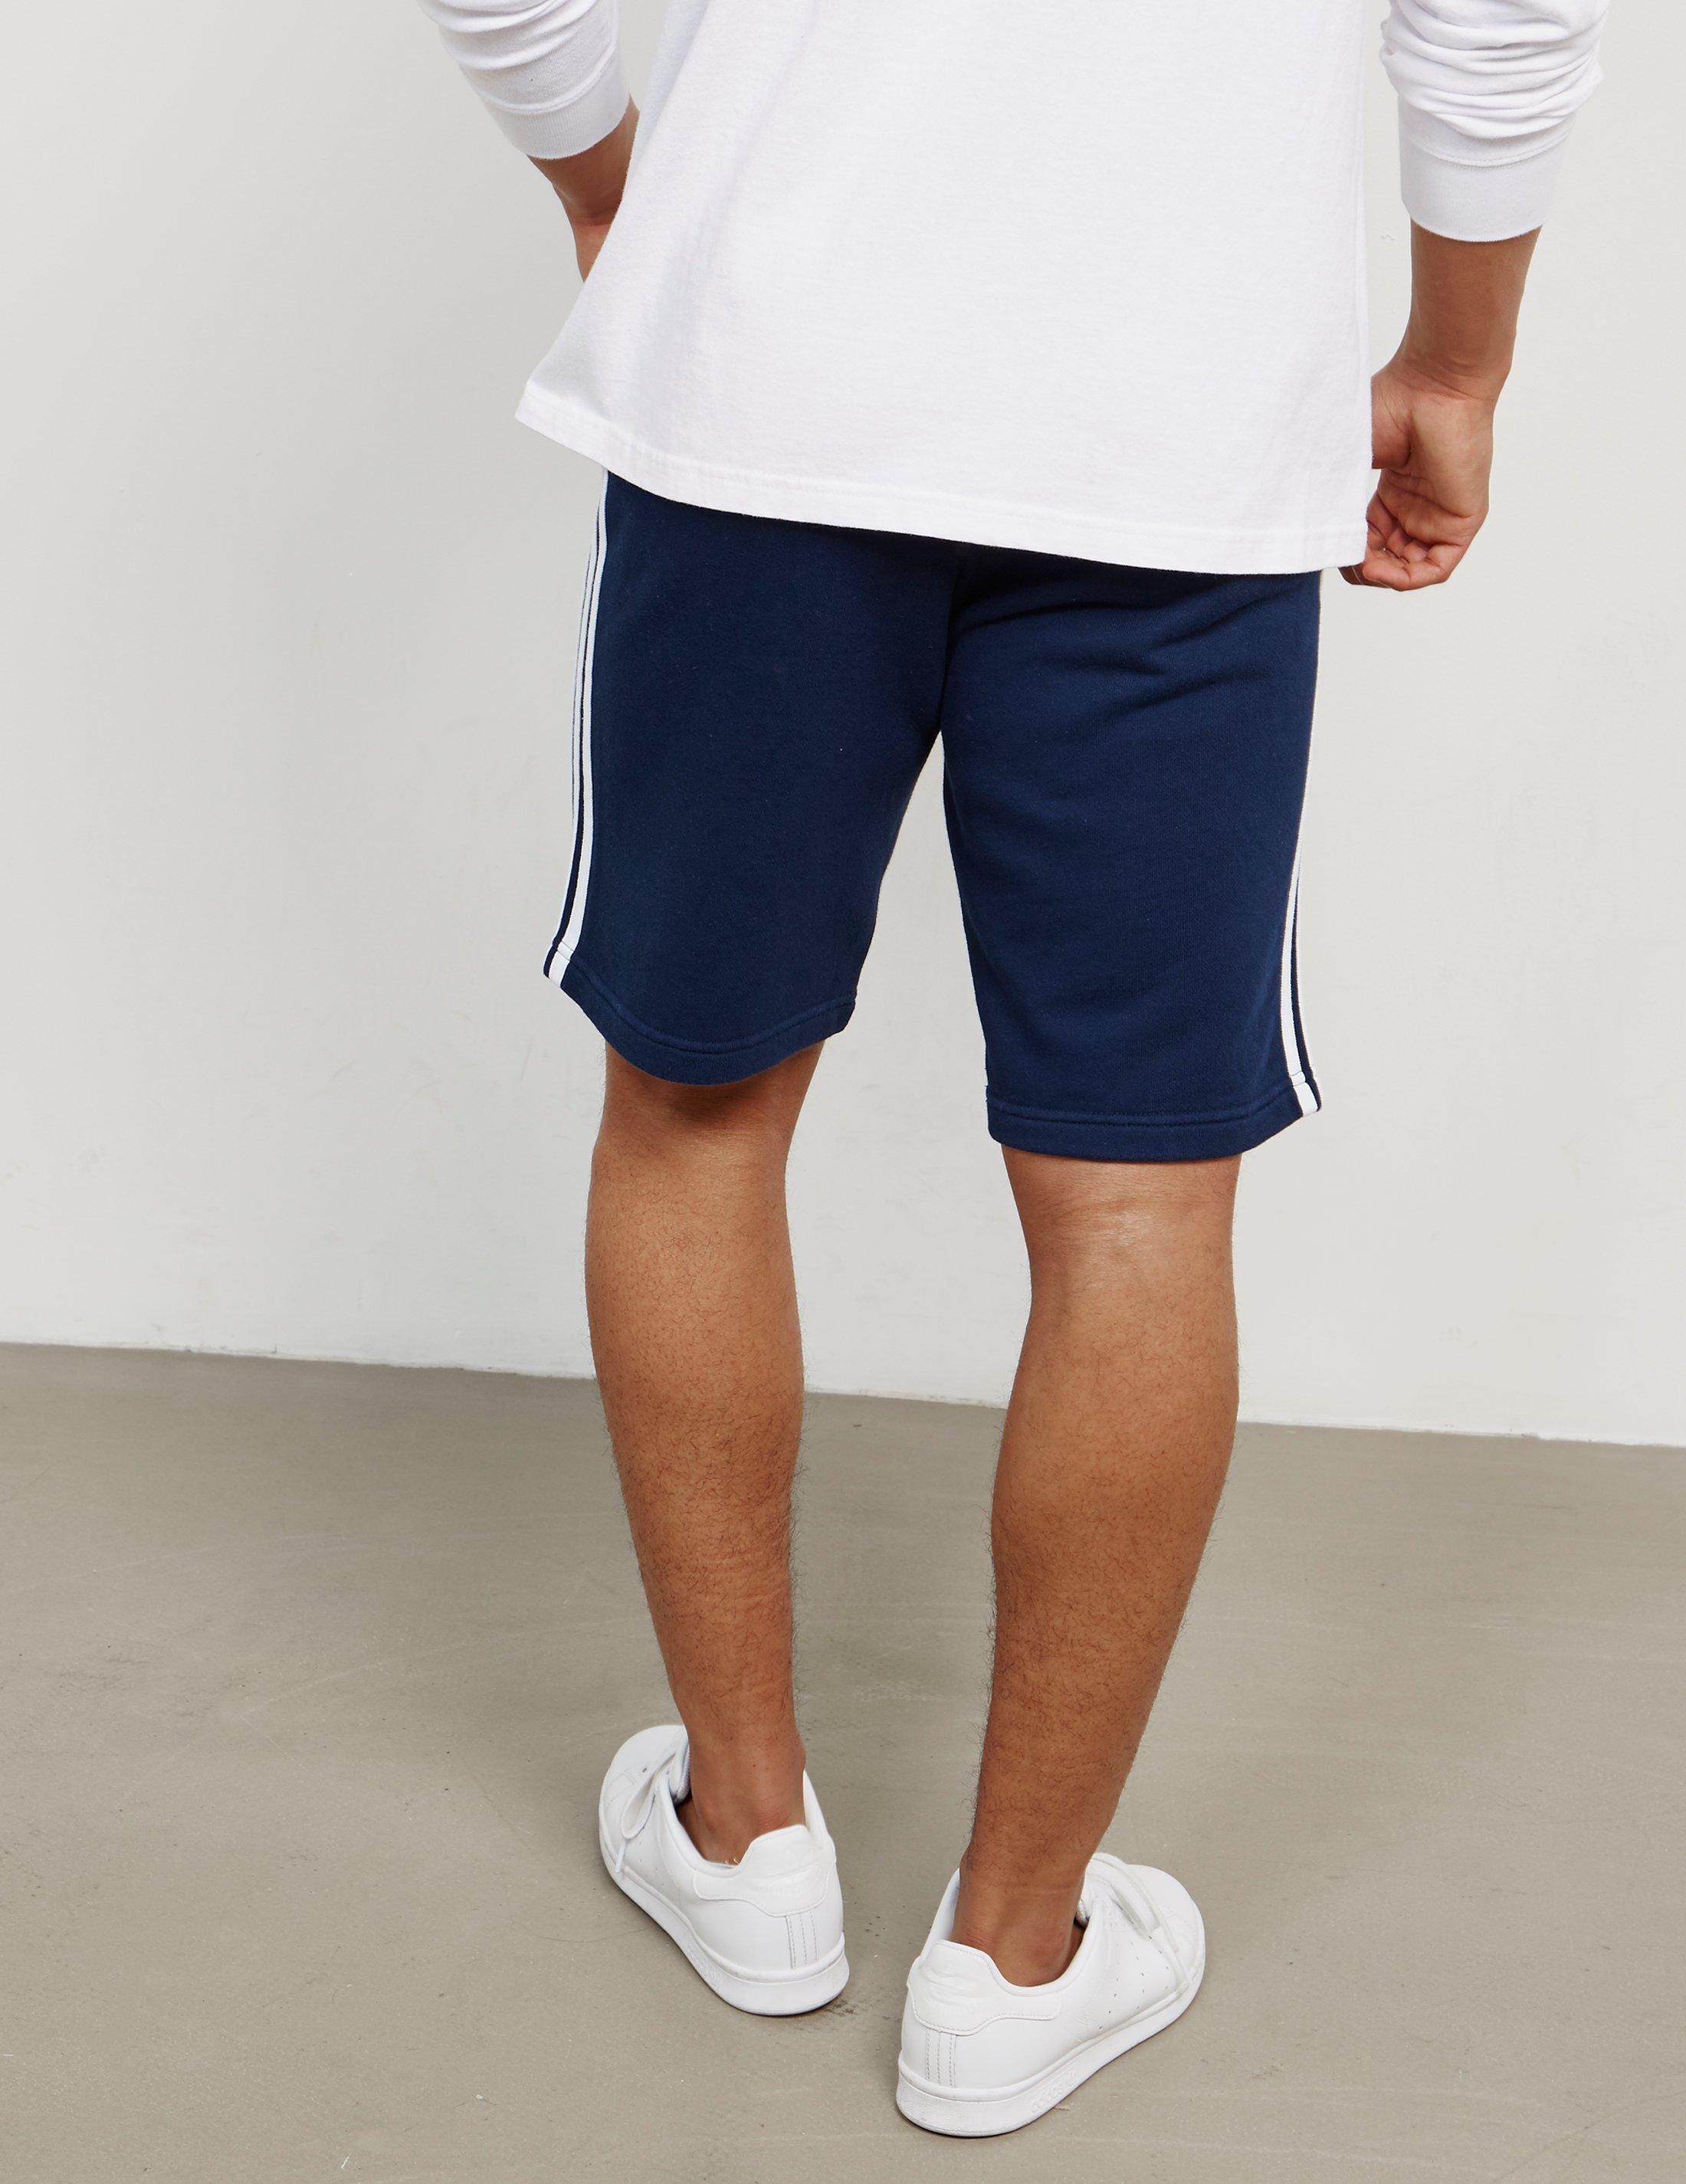 adidas navy fleece shorts